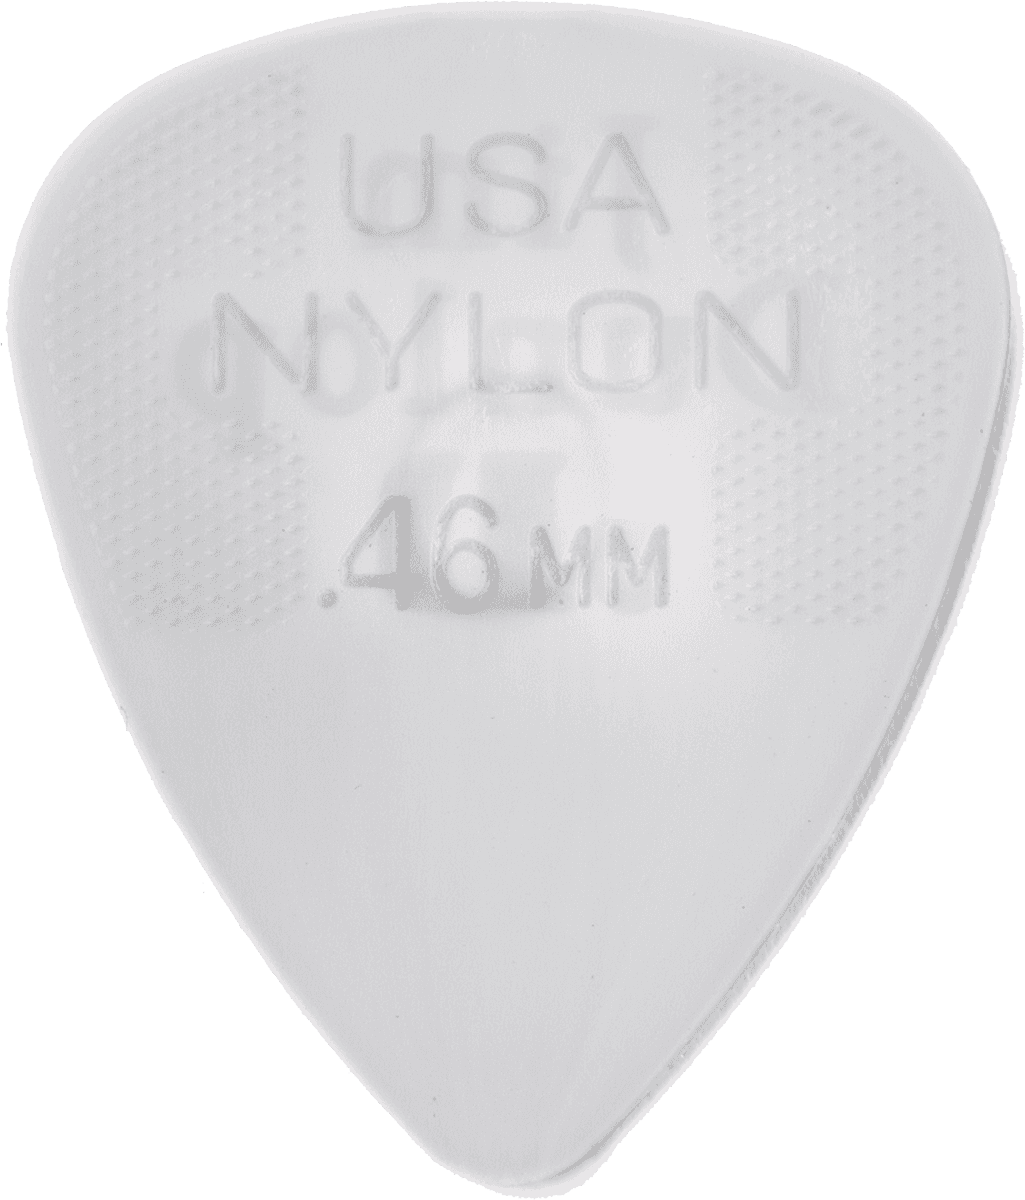 Dunlop Nylon Standard 1